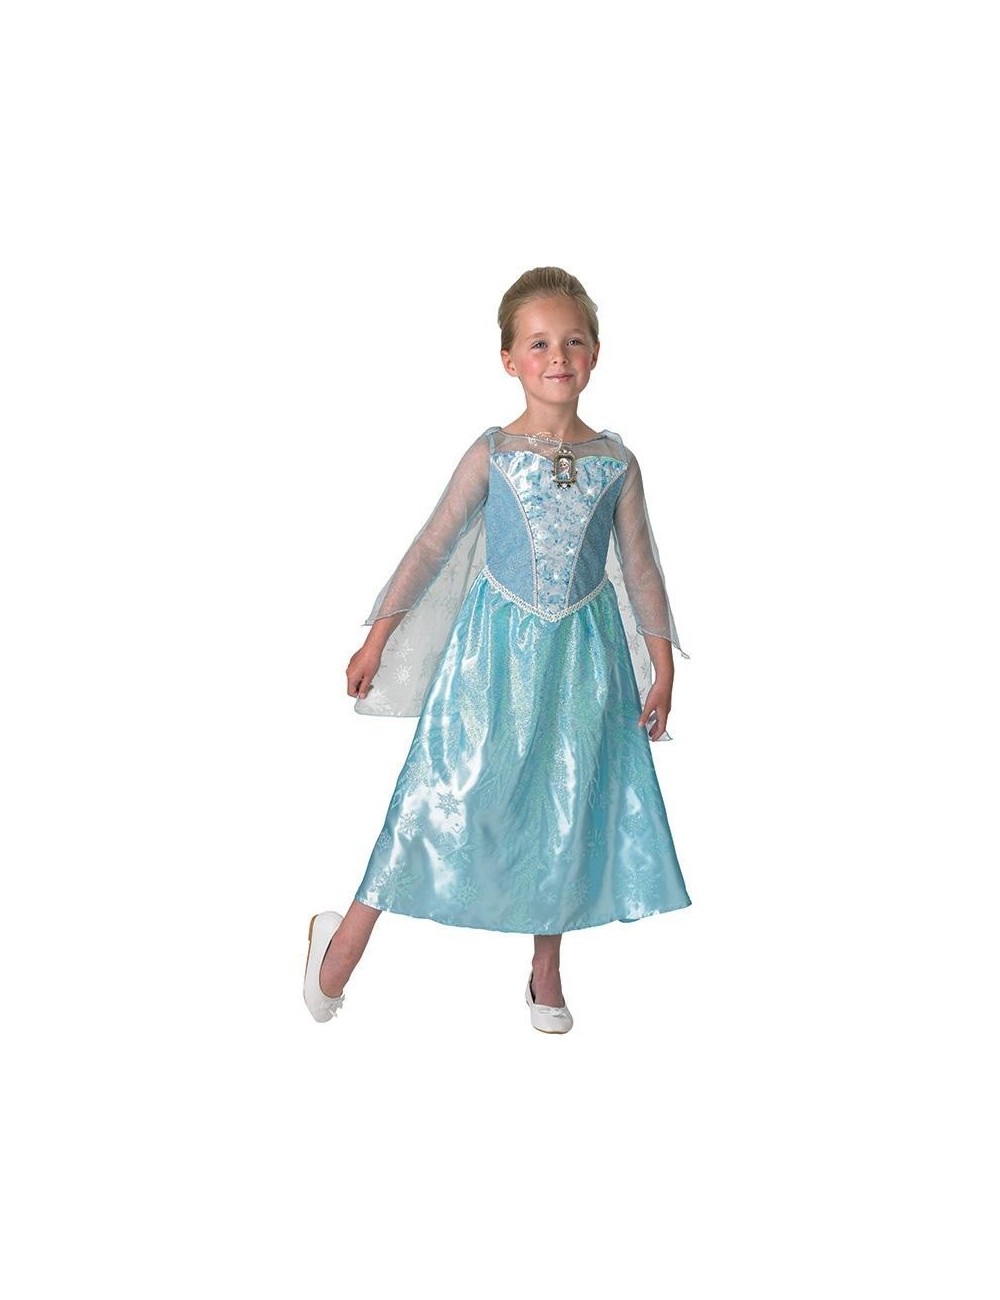 Rochie Elsa Musical, Disney Frozen, 3-8 ani